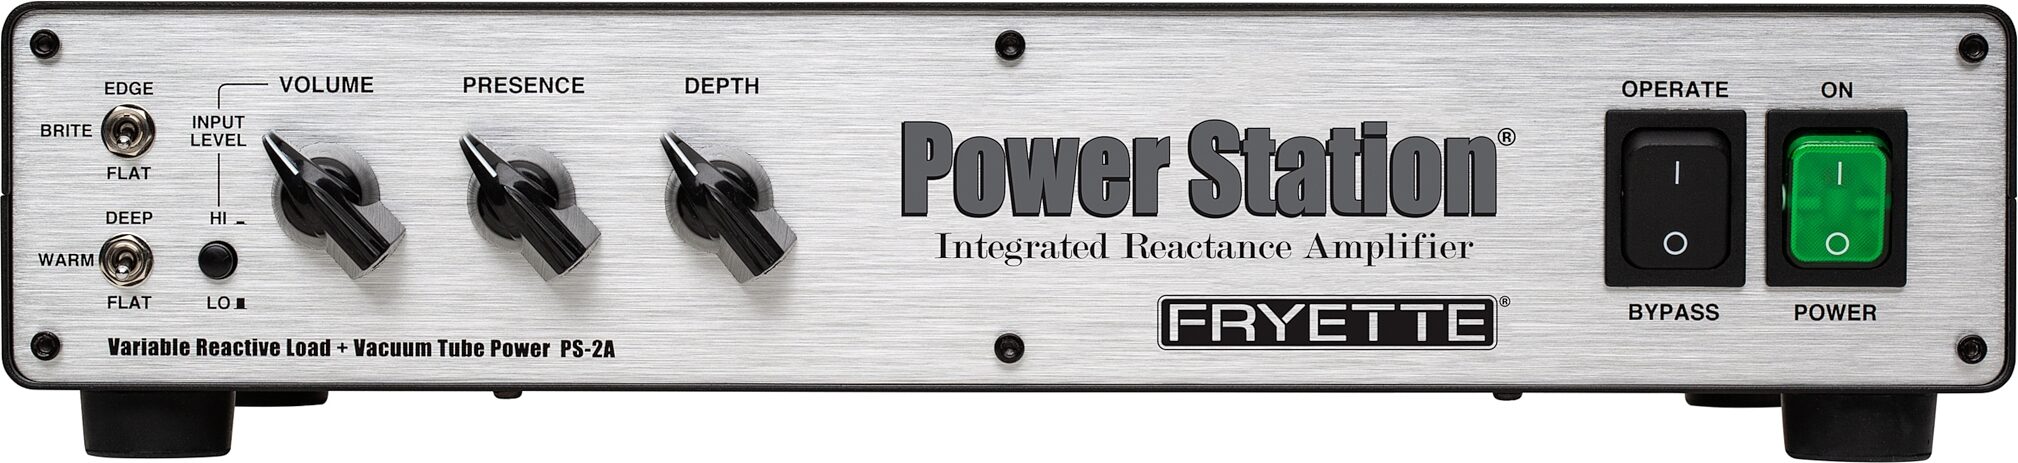 Fryette PS-2A Power Station Integrated Reactance Amp v2 | zZounds